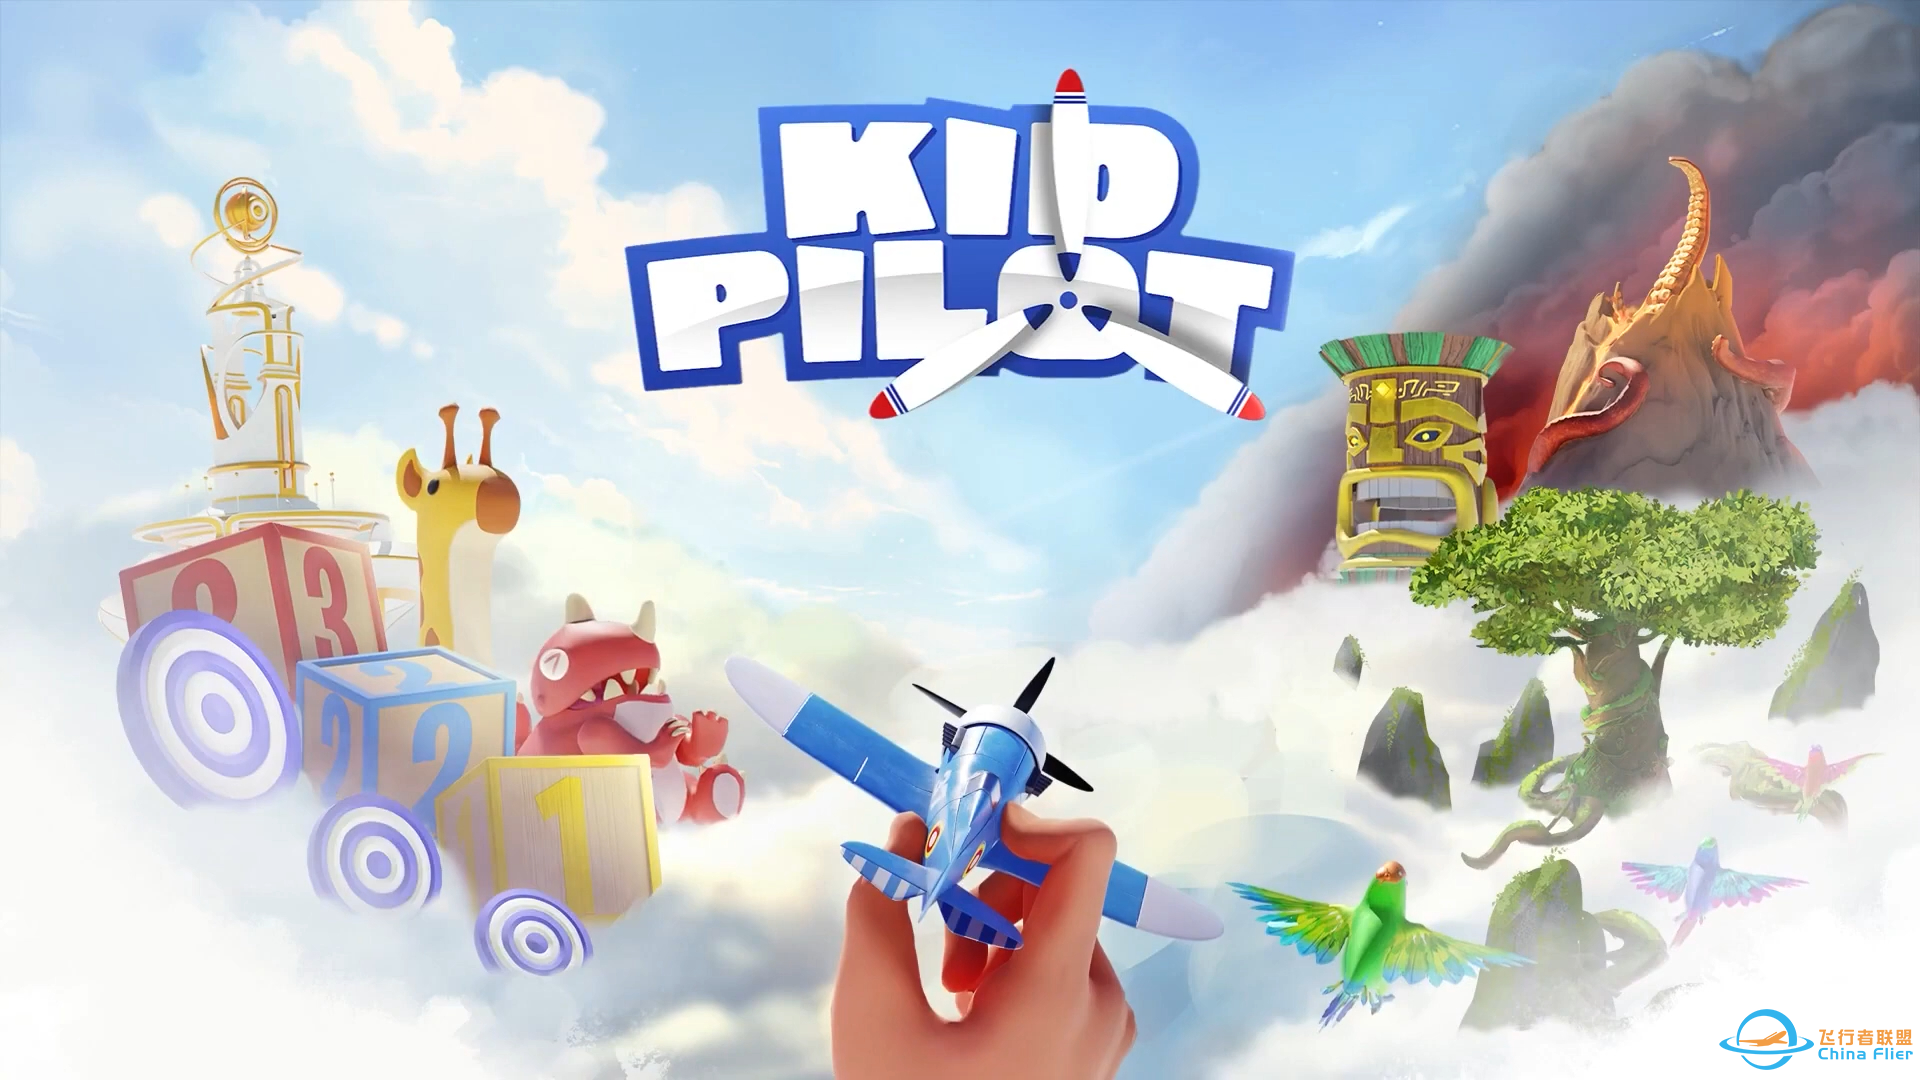 VR飞行玩具模拟器《Kid Pilot | 儿童飞行员》公布发售日期【SteamVR】-8419 